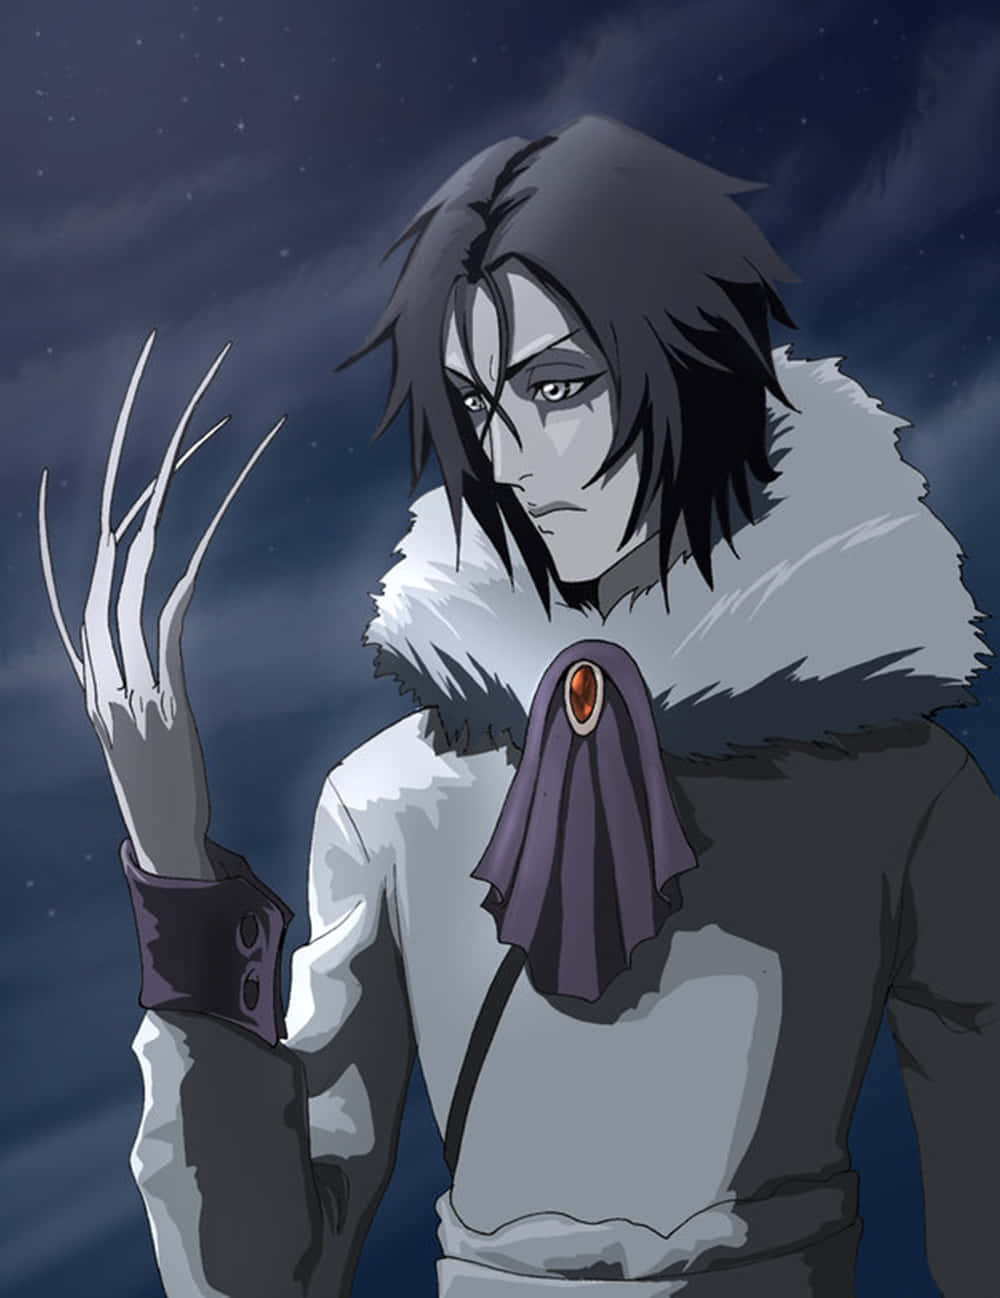 Muramasa, the rebellious Zanpakuto spirit from Bleach anime, wielding his unique sword powers. Wallpaper